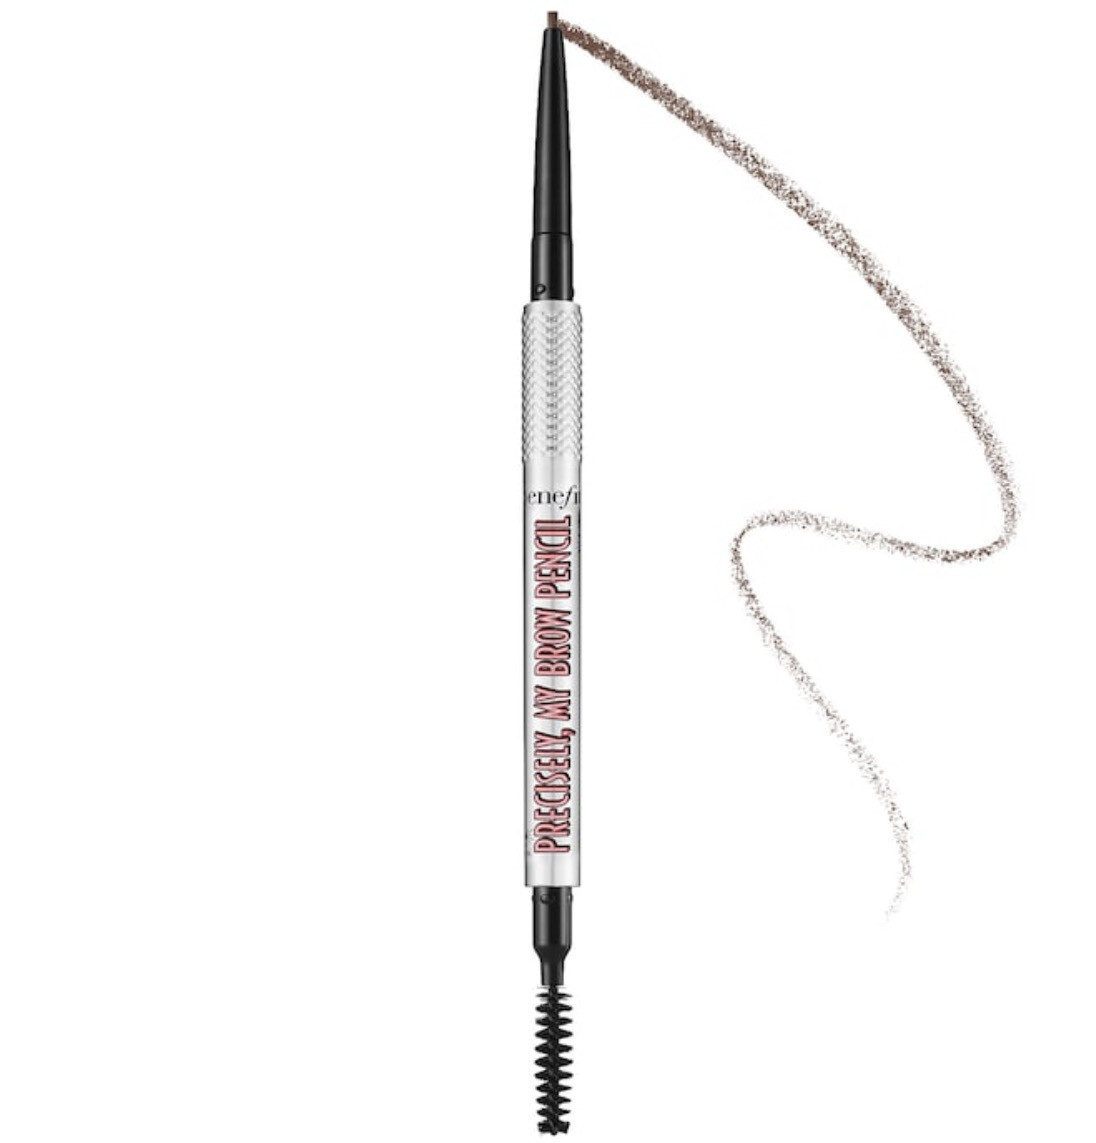 Benefit Cosmetics - Precisely, My Brow Pencil Waterproof Eyebrow Definer | Shade 3 - warm light brown